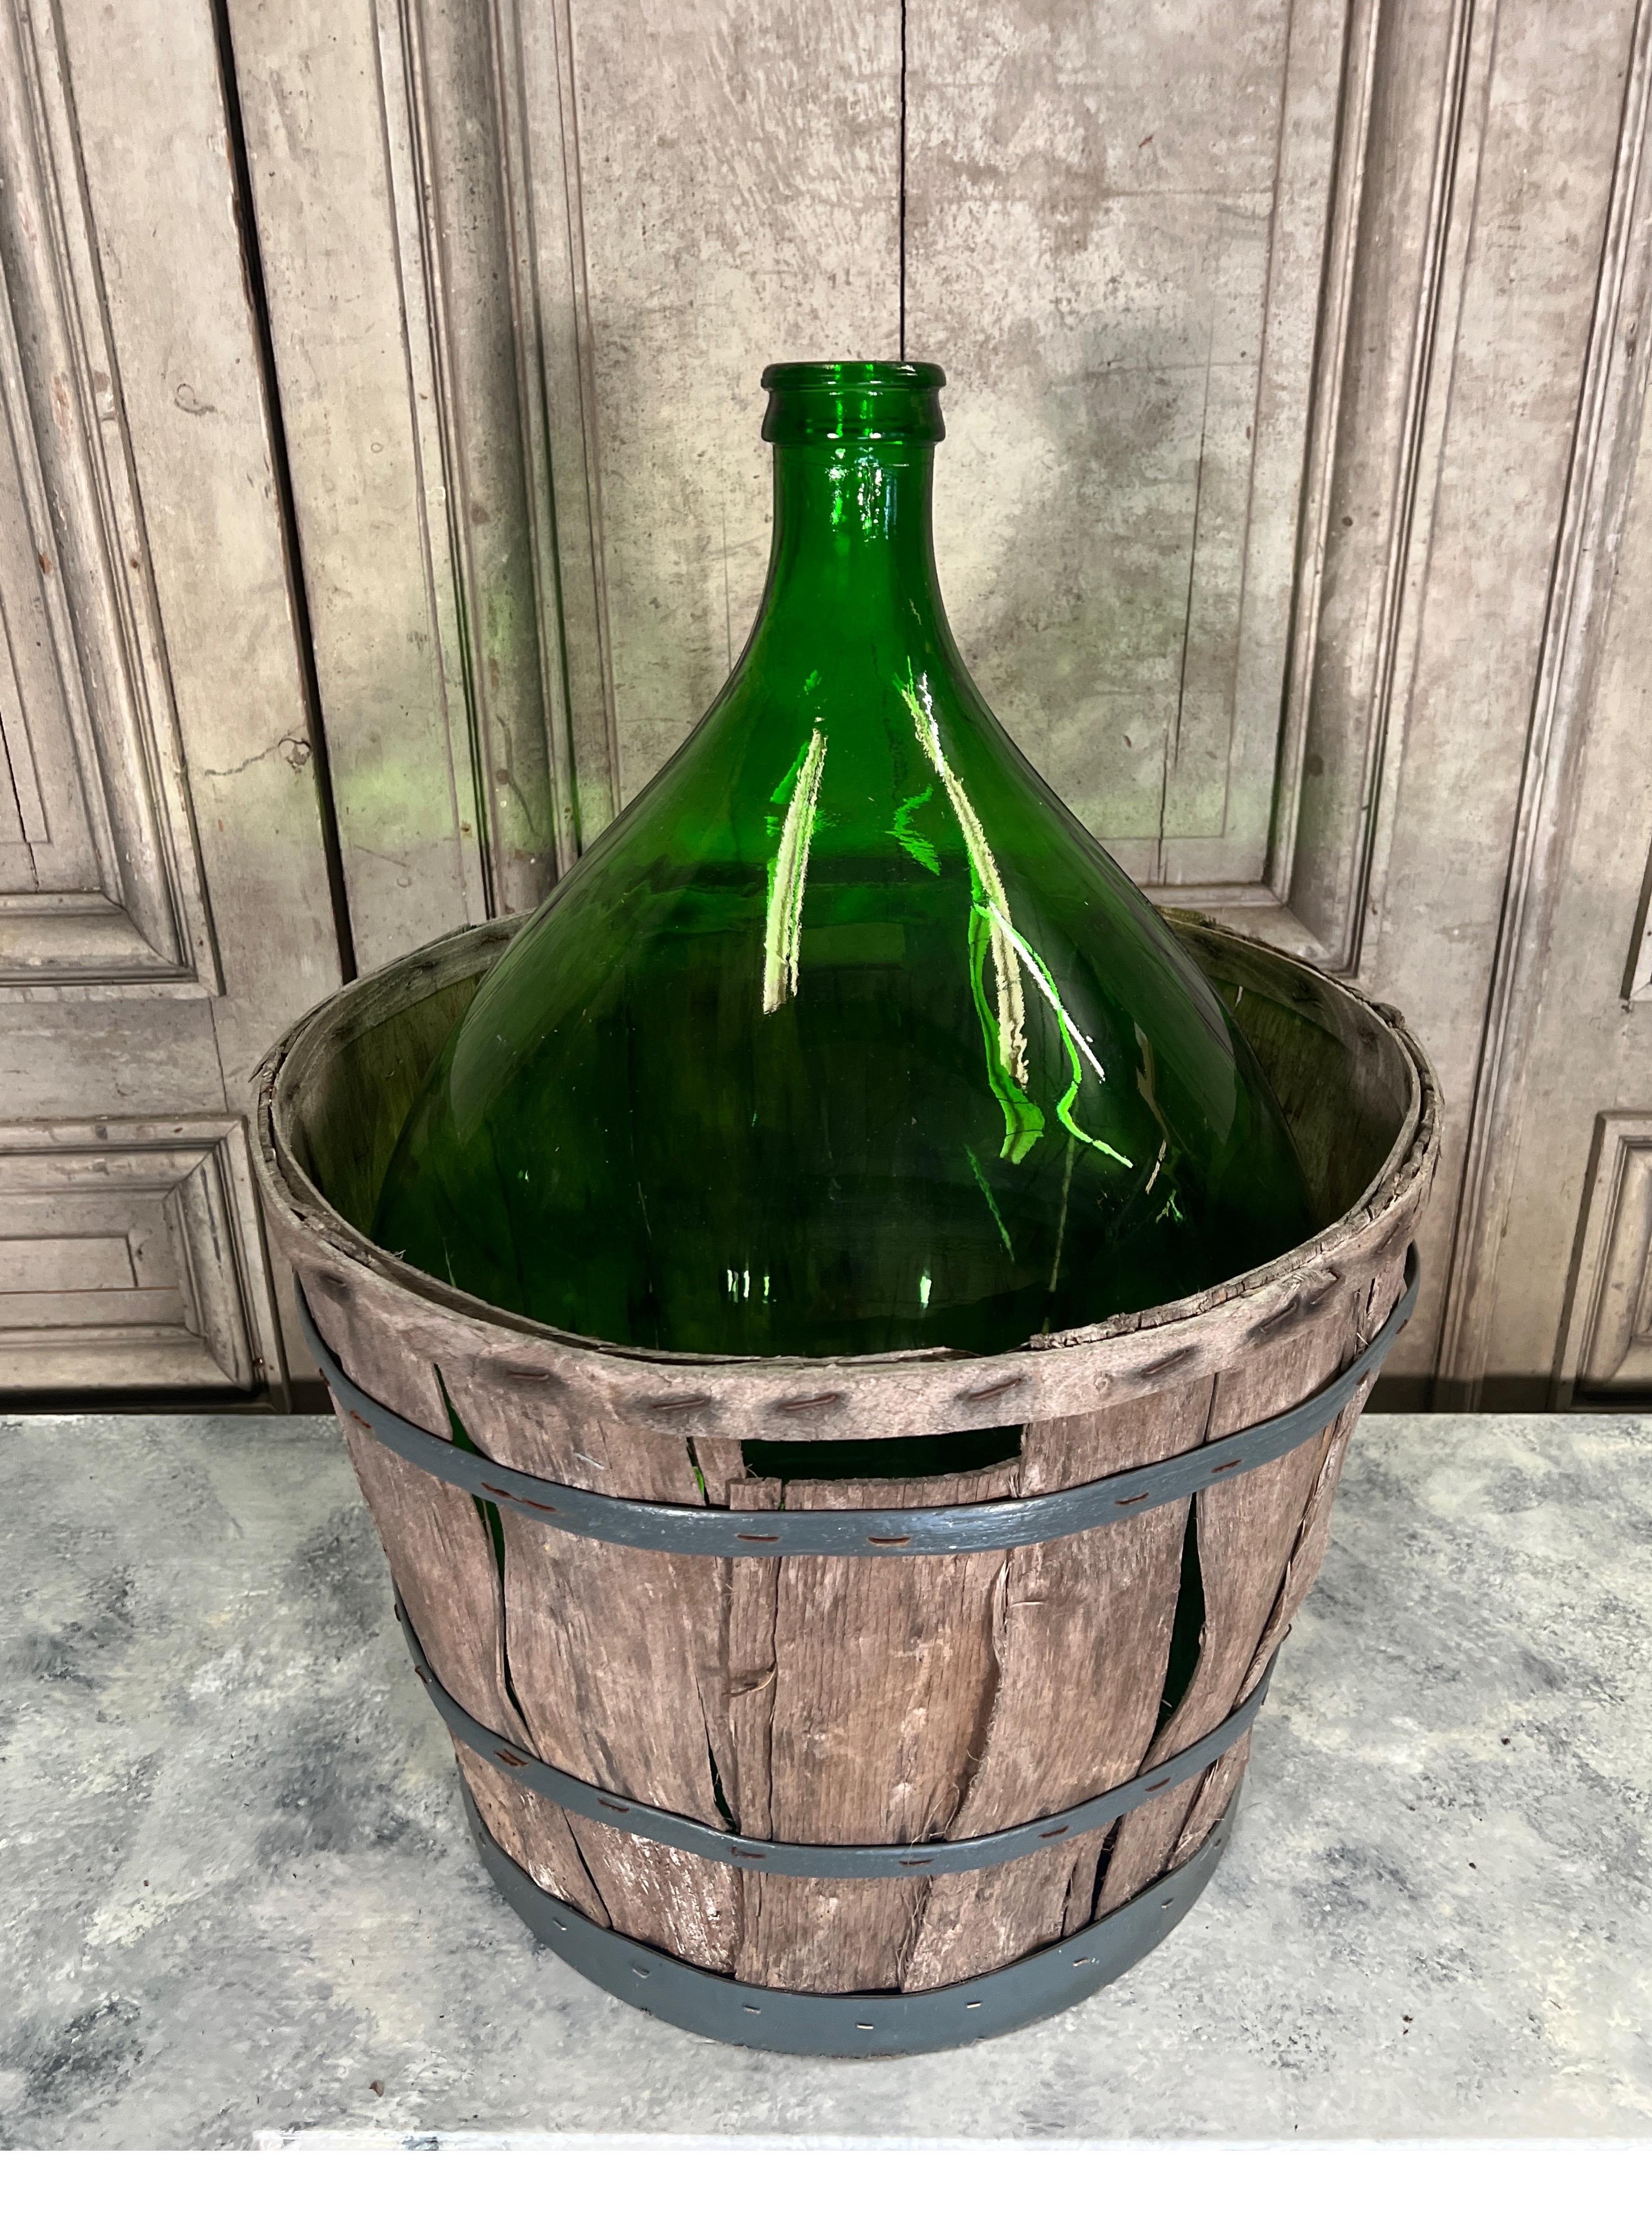 large green glass bottle